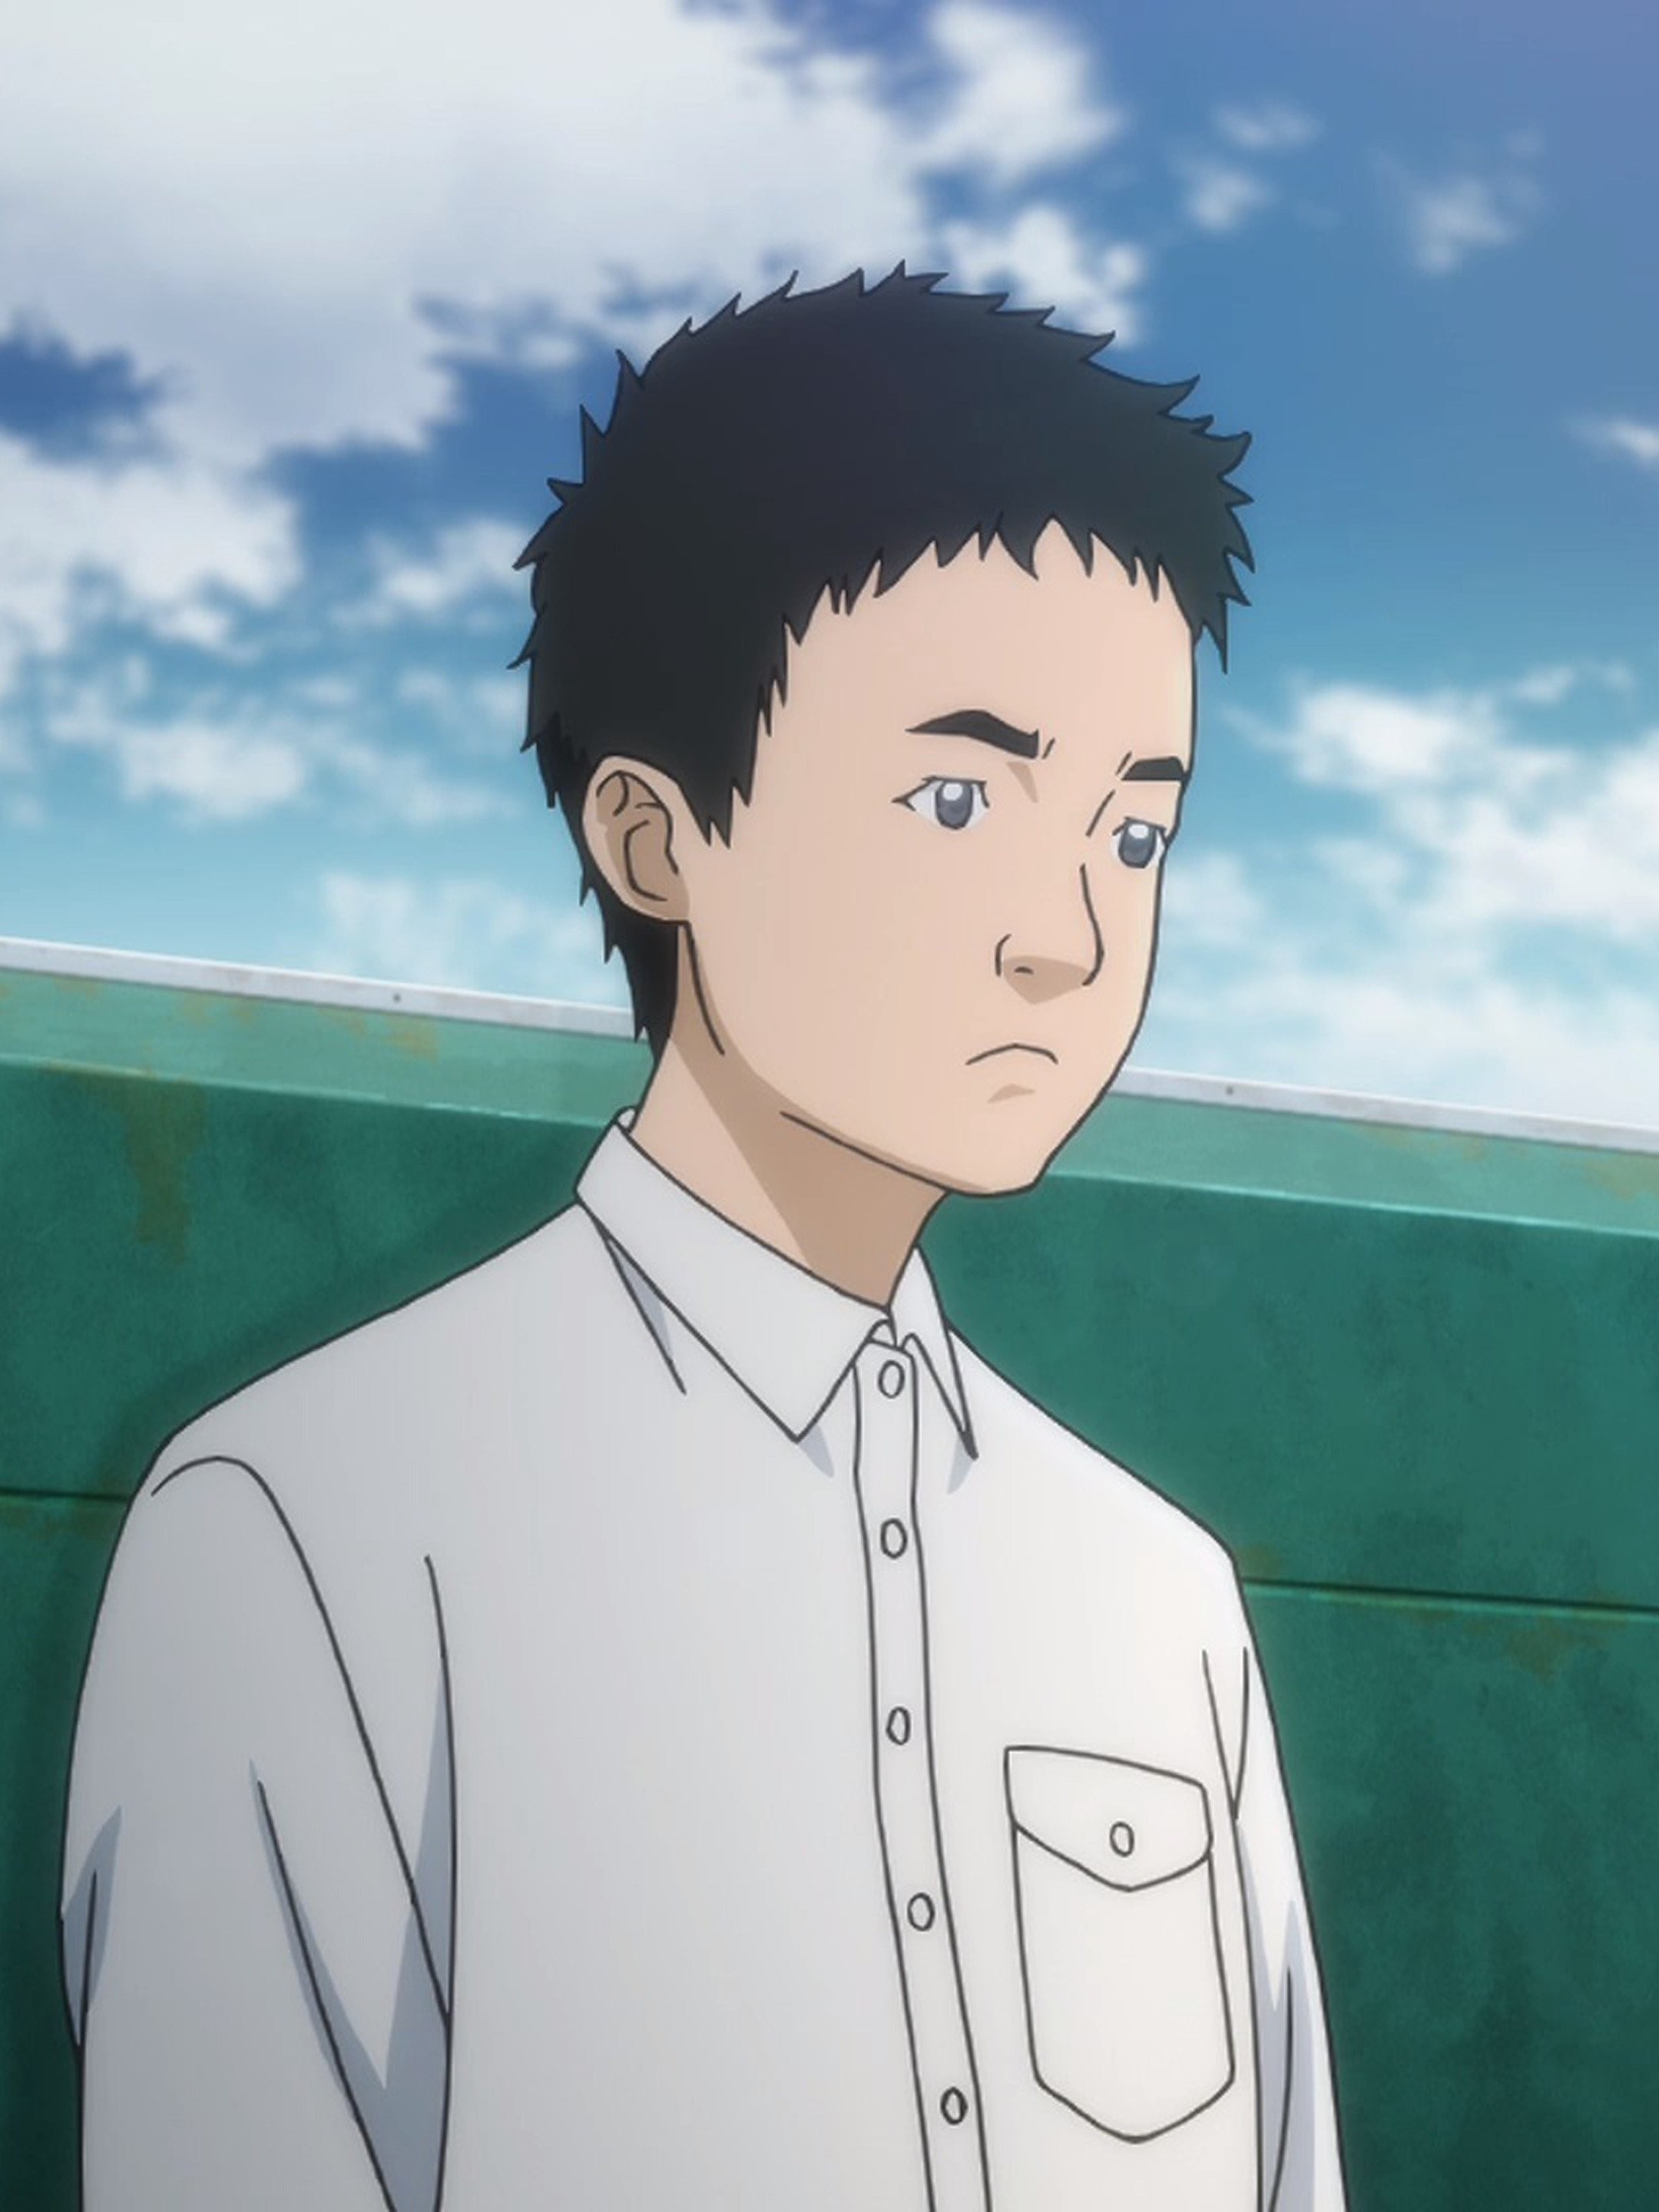 Inuyashiki - Last Hero: Season 1, Episode 7 - Rotten Tomatoes